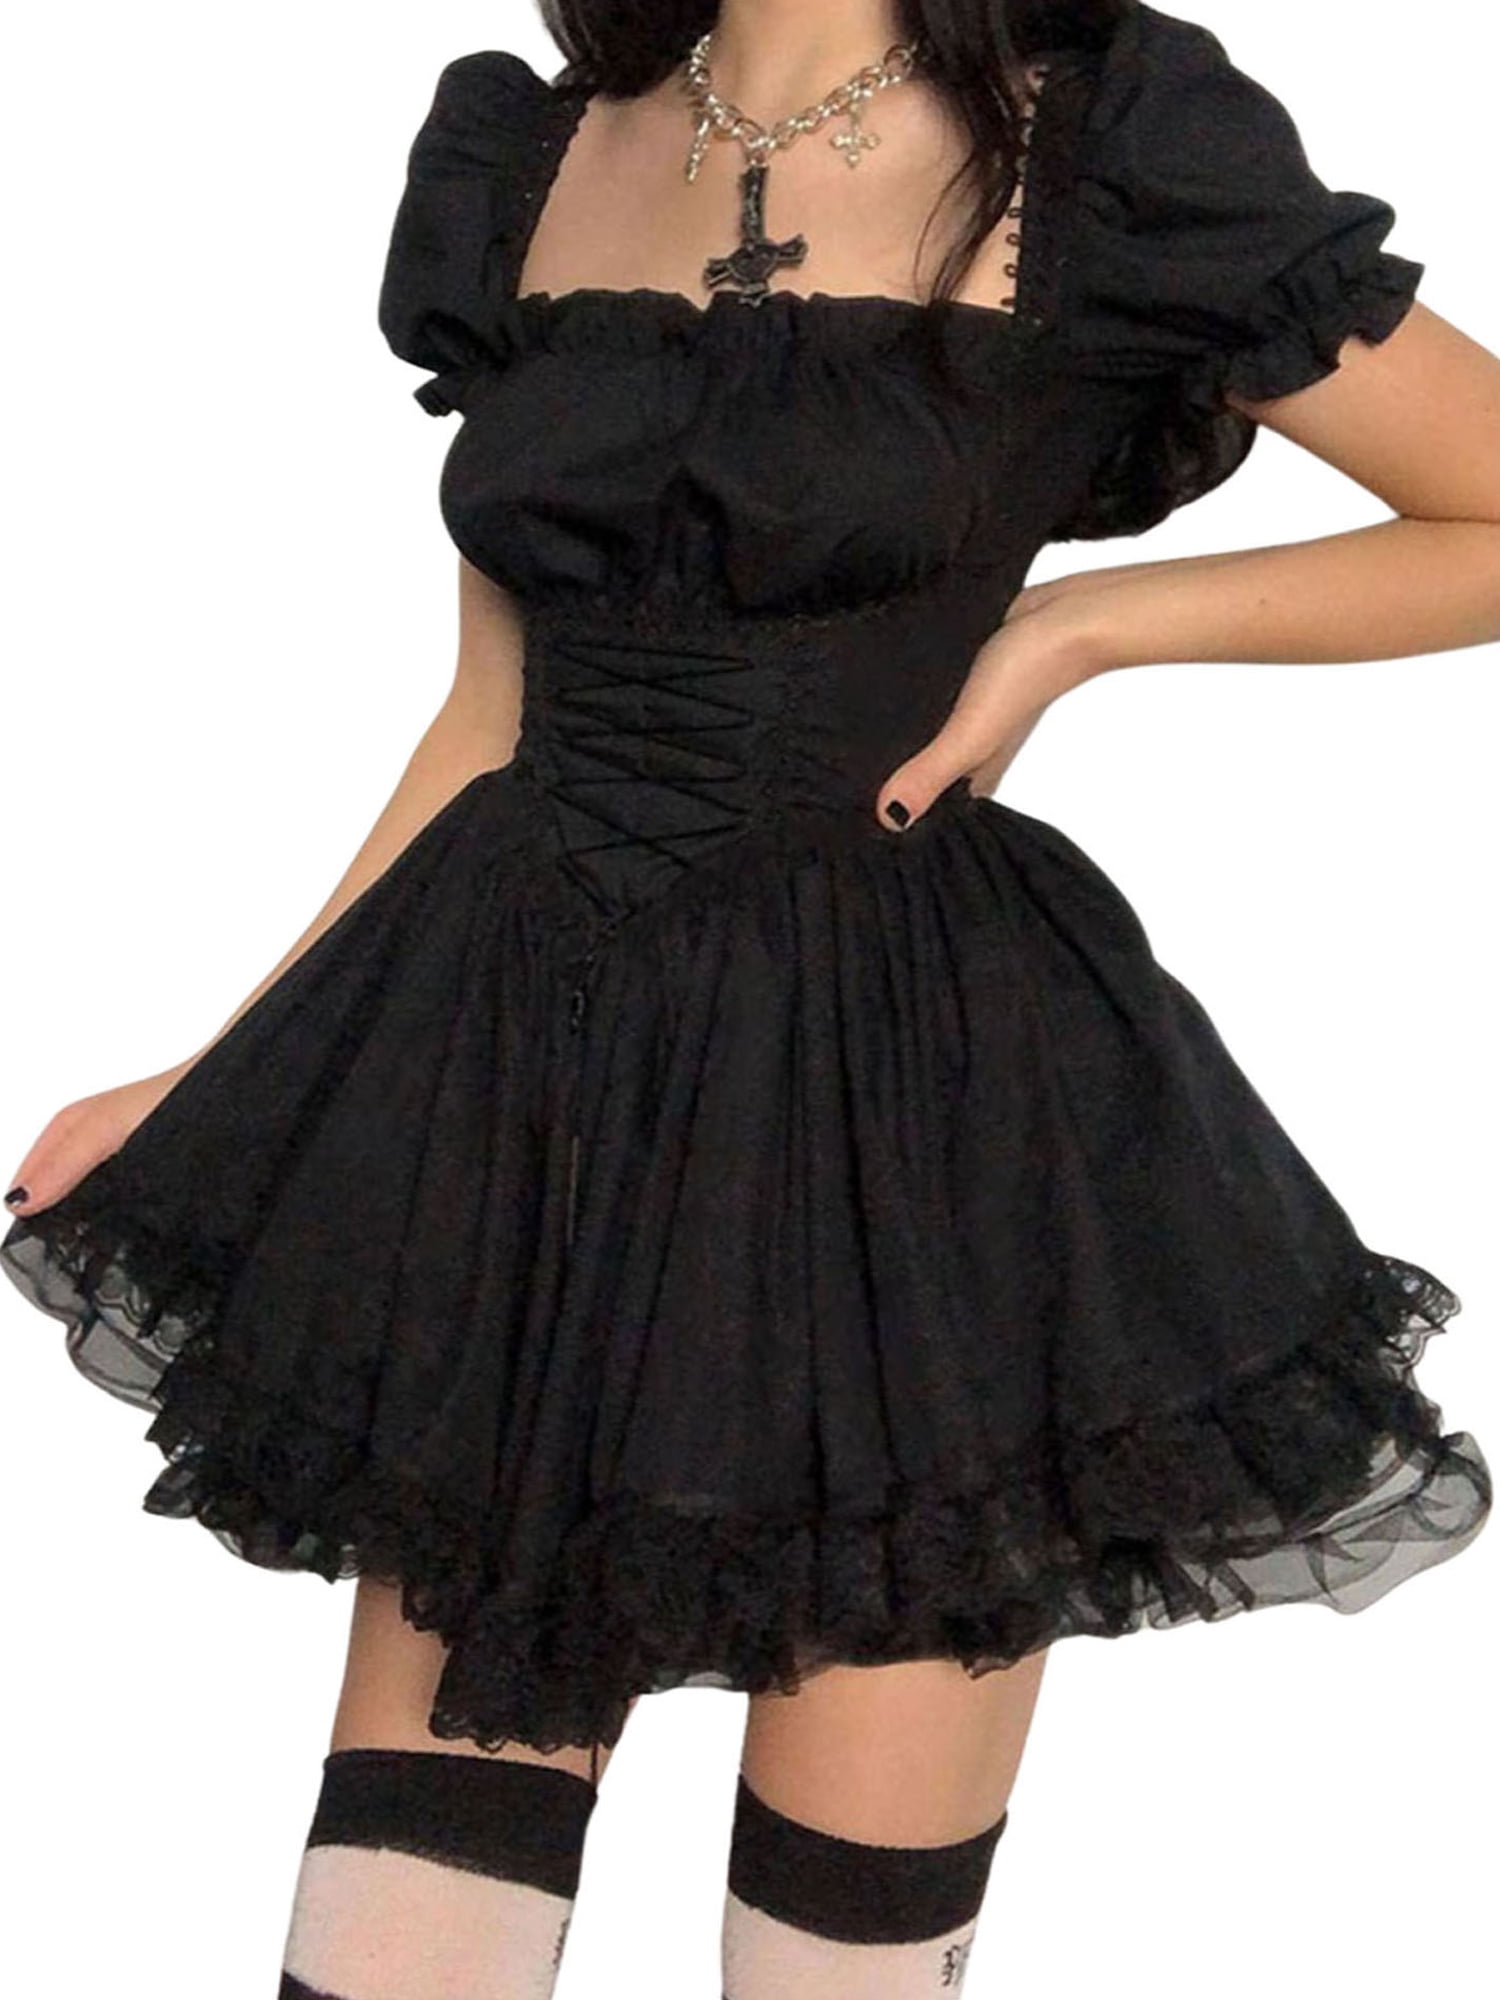 Lolita Spaghetti Strap Backless White Lace Black Bodycon Dress Prom Party Club Dresses Chic Dress